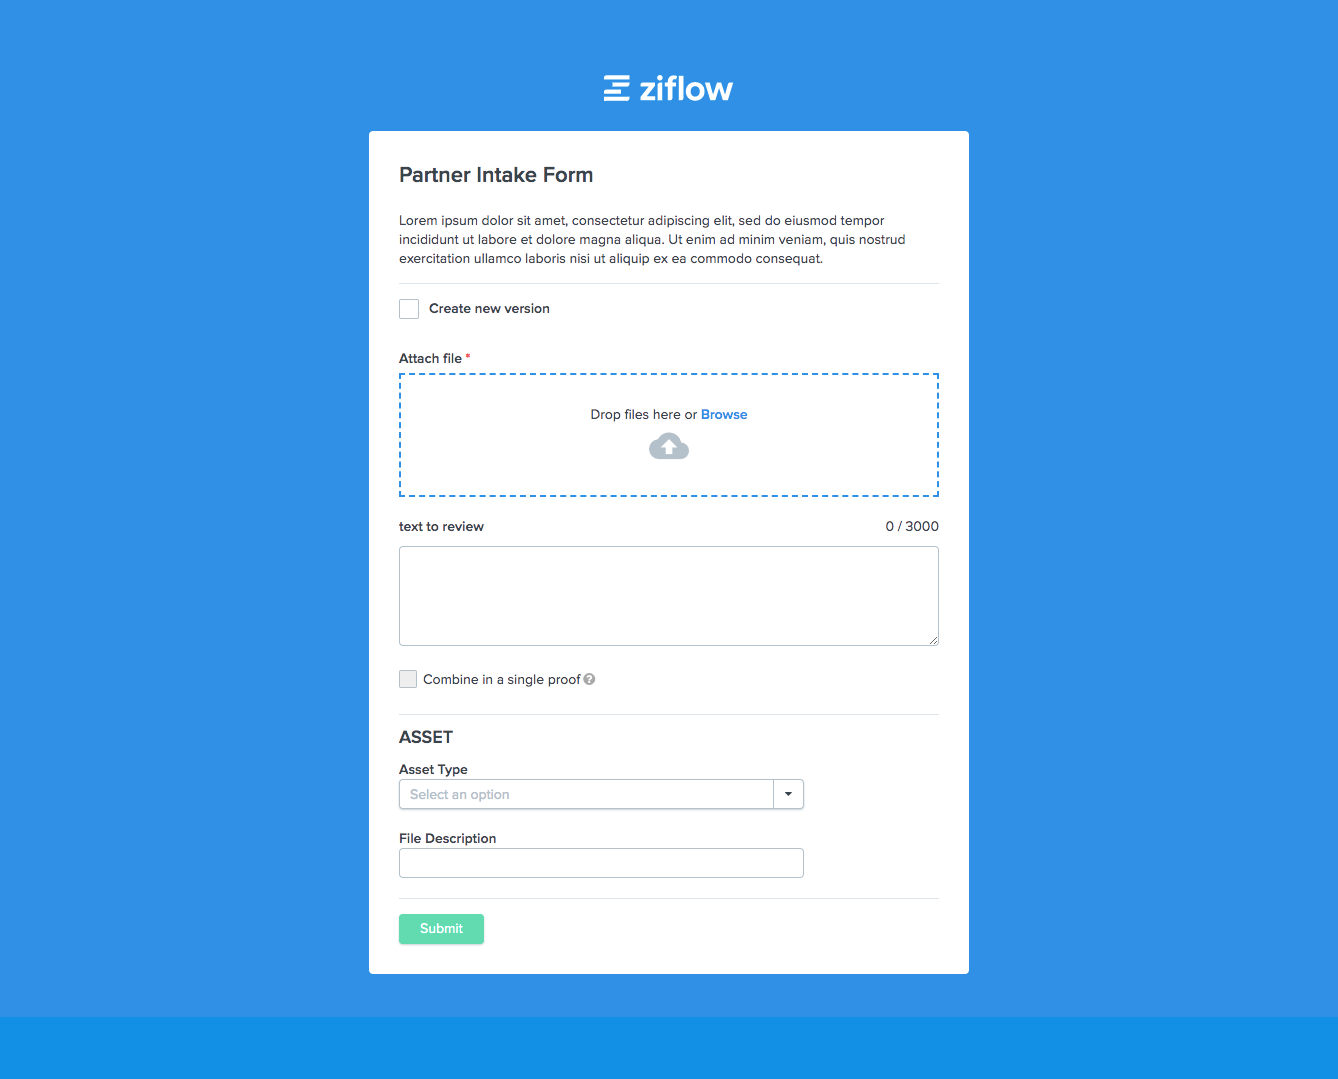 Ziflow partner intake form screenshot - upload files and provide necessary data